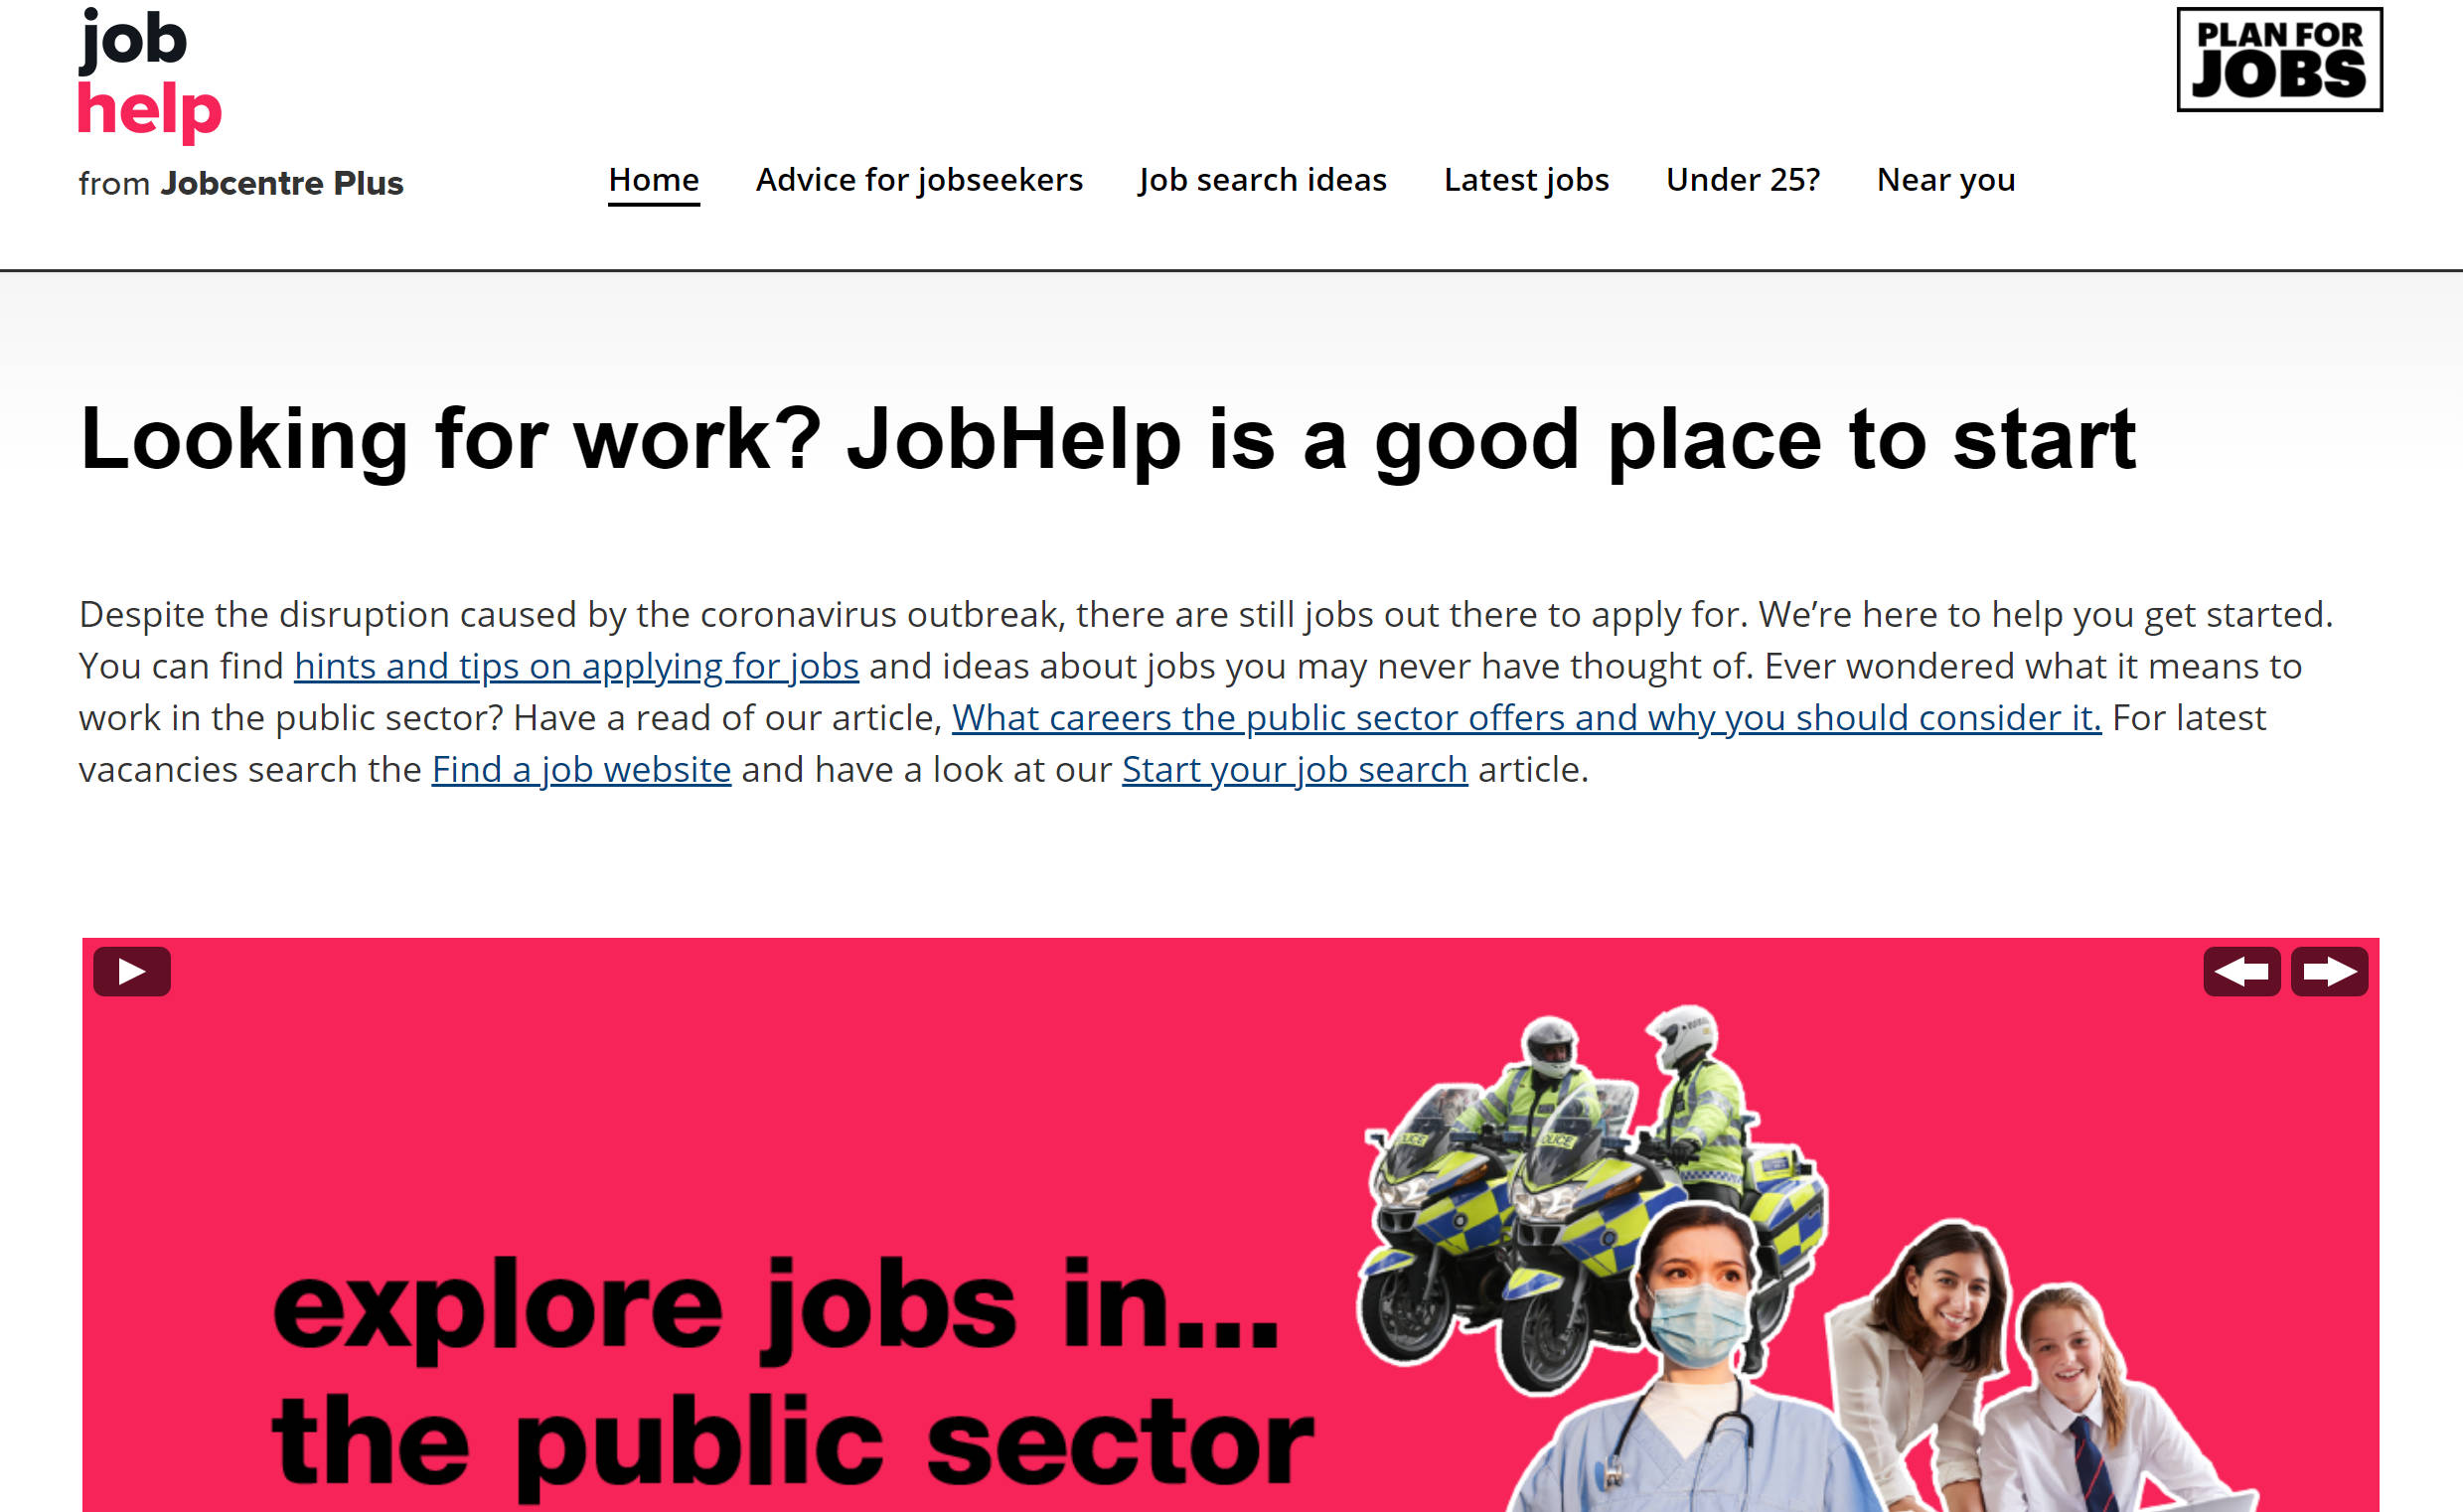 Jobhelp from Jobcentre Plus